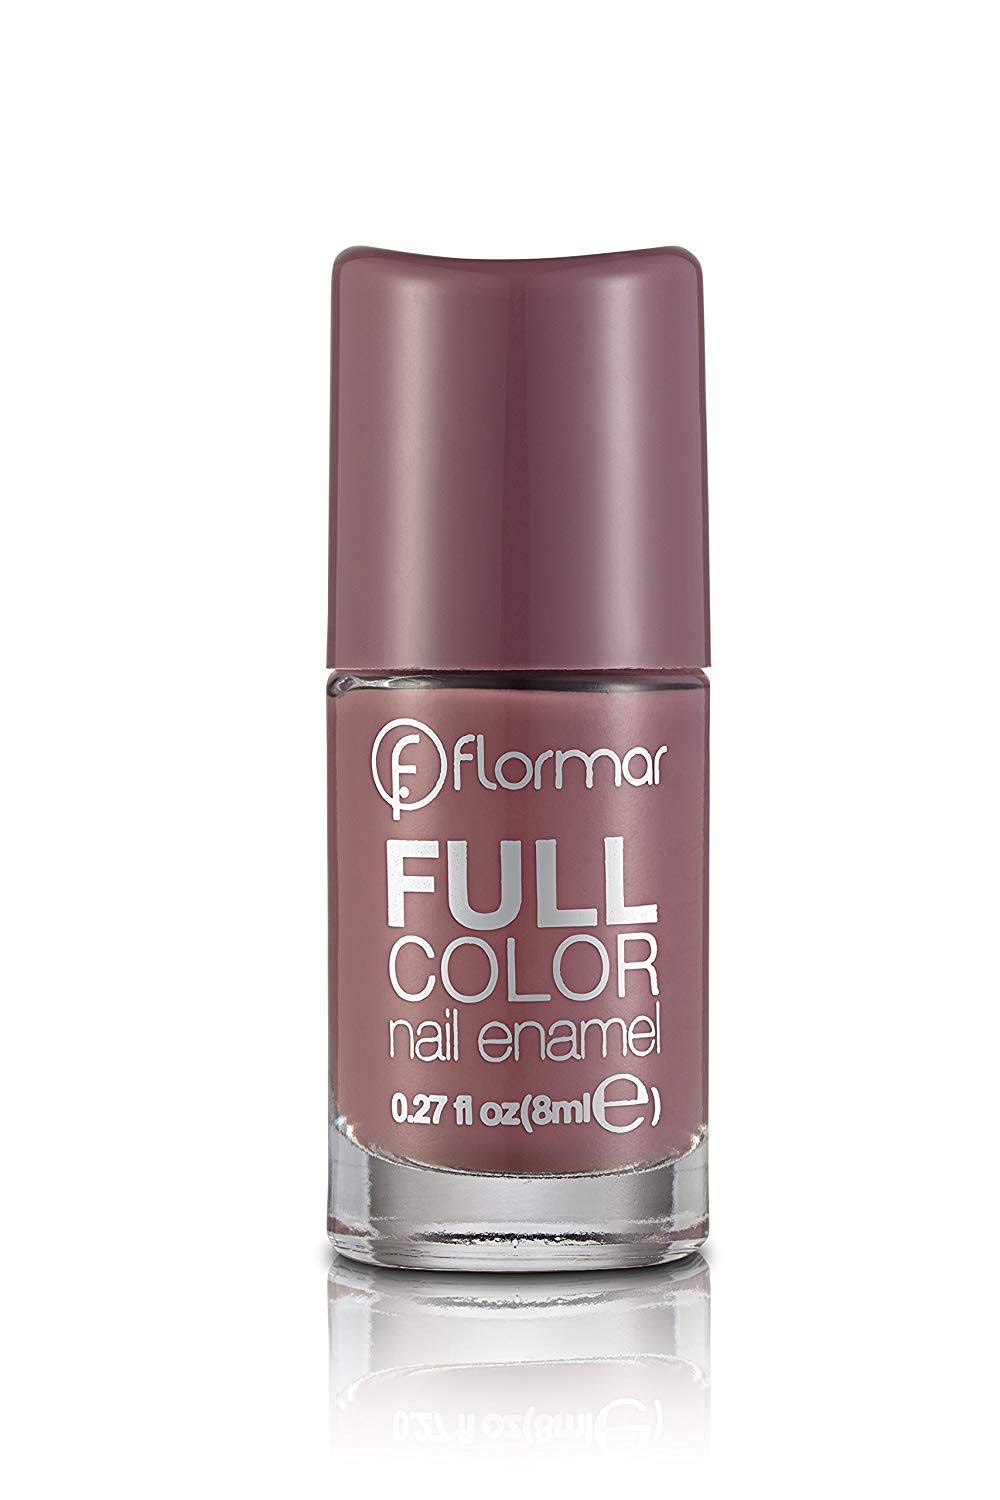 Flormar Full Color Nail Enamel - Berry Brown, 8ml